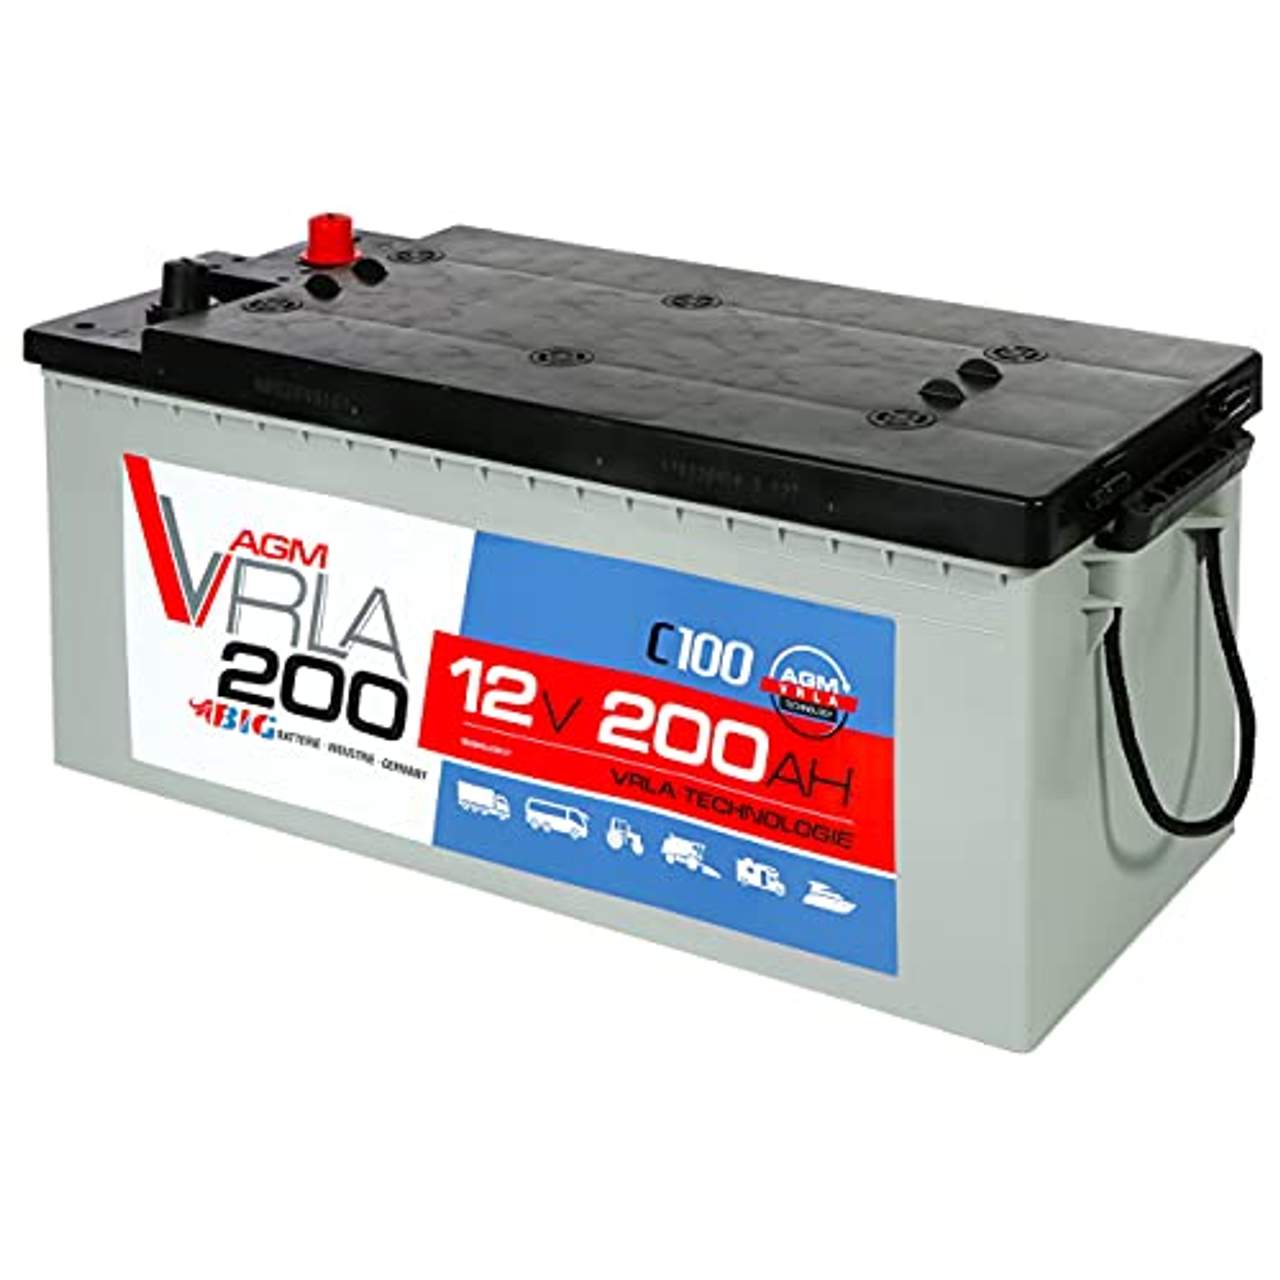 BIG AGM Solarbatterie 12V 200Ah C100 Batterie Versorgung Mover Caravan Boot